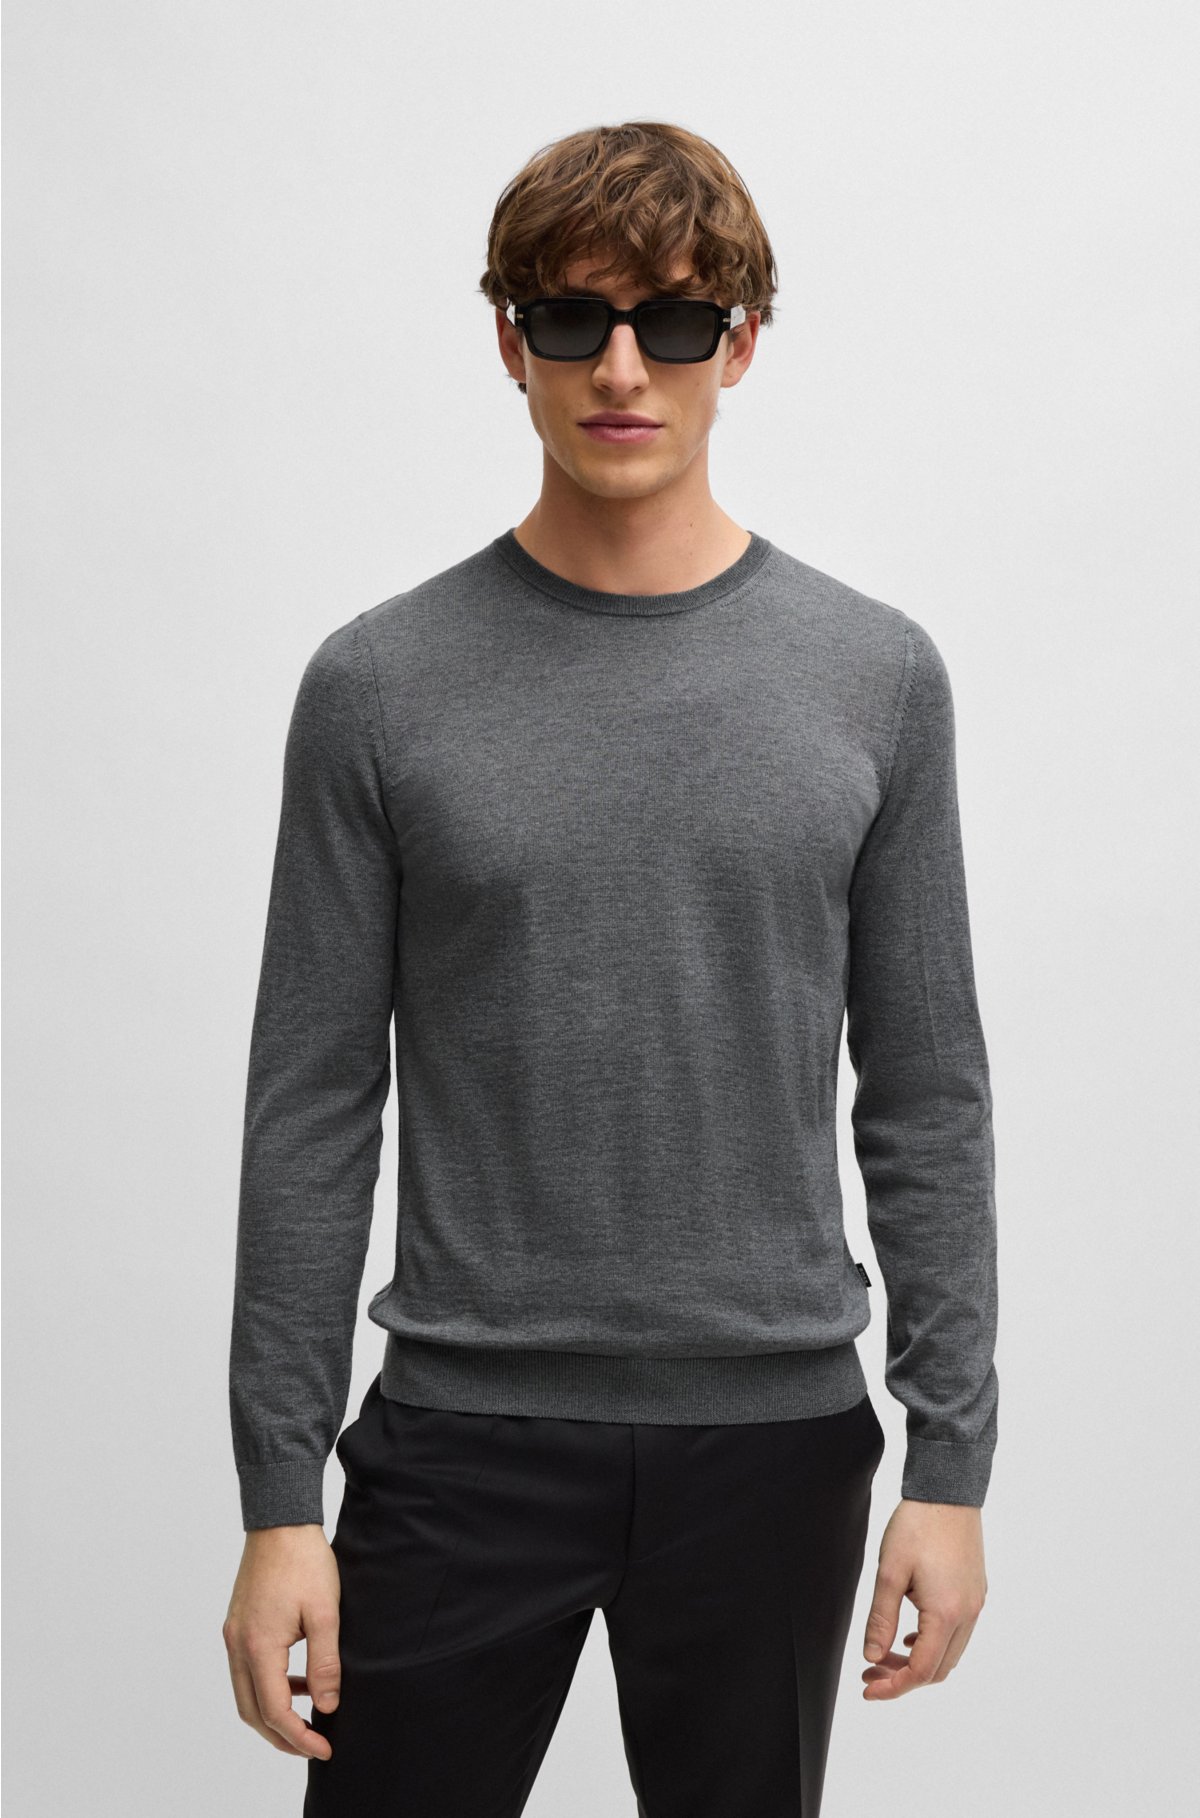 BOSS - Virgin-wool sweater with two-tone monogram jacquard